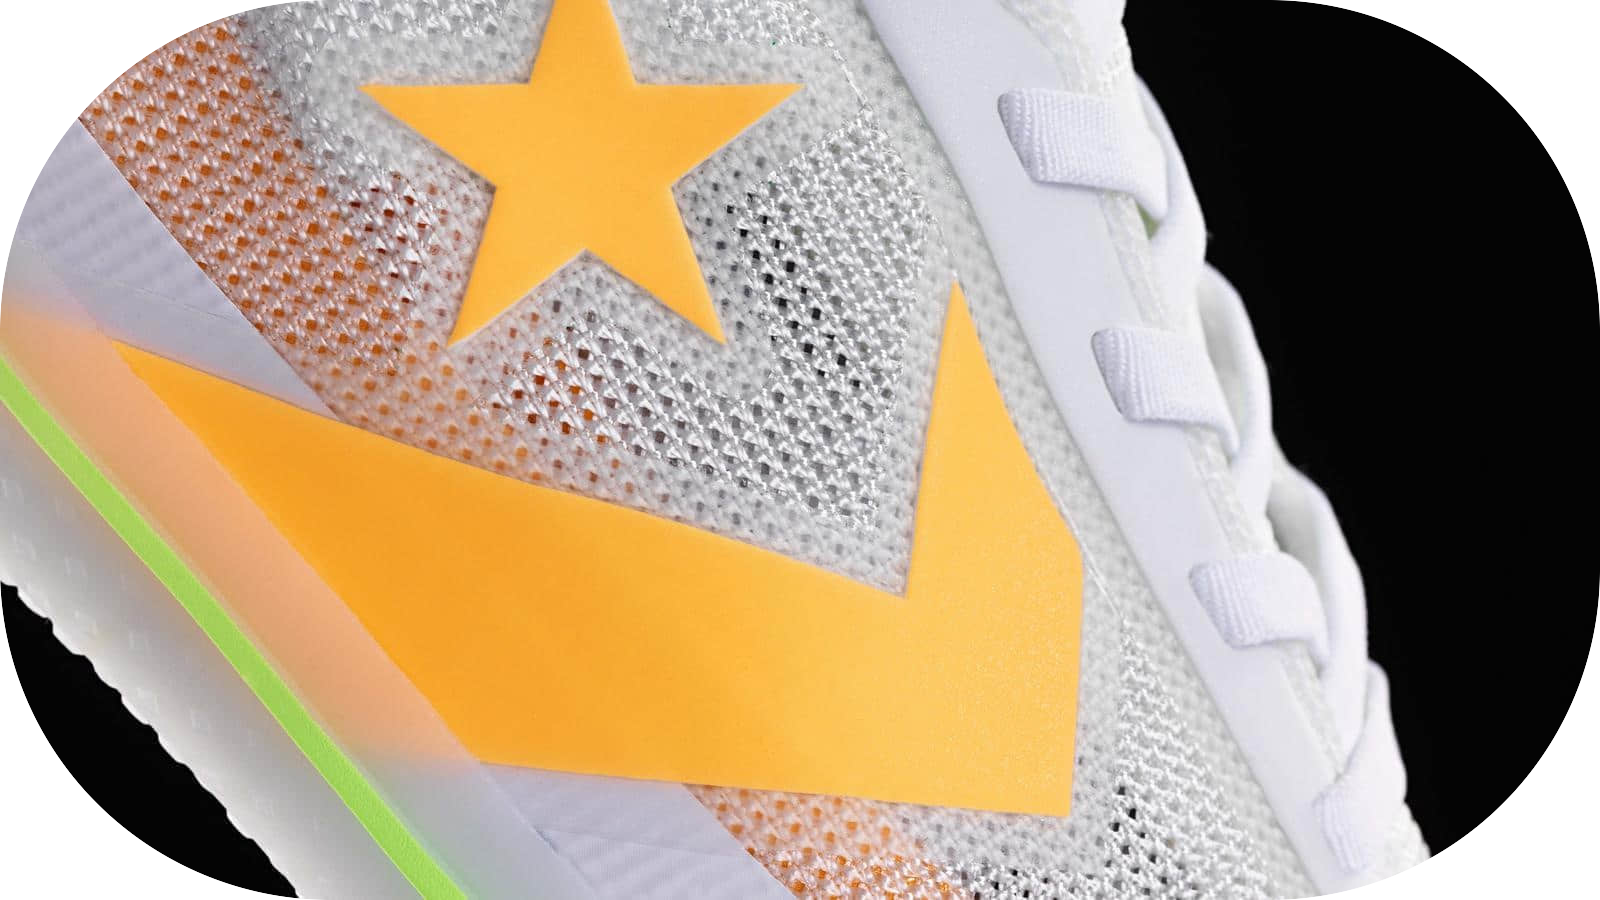 Converse All Star Pro 匡威BB系列全新配色实战篮球鞋估计将于7月26日发布_女士运动鞋潮牌